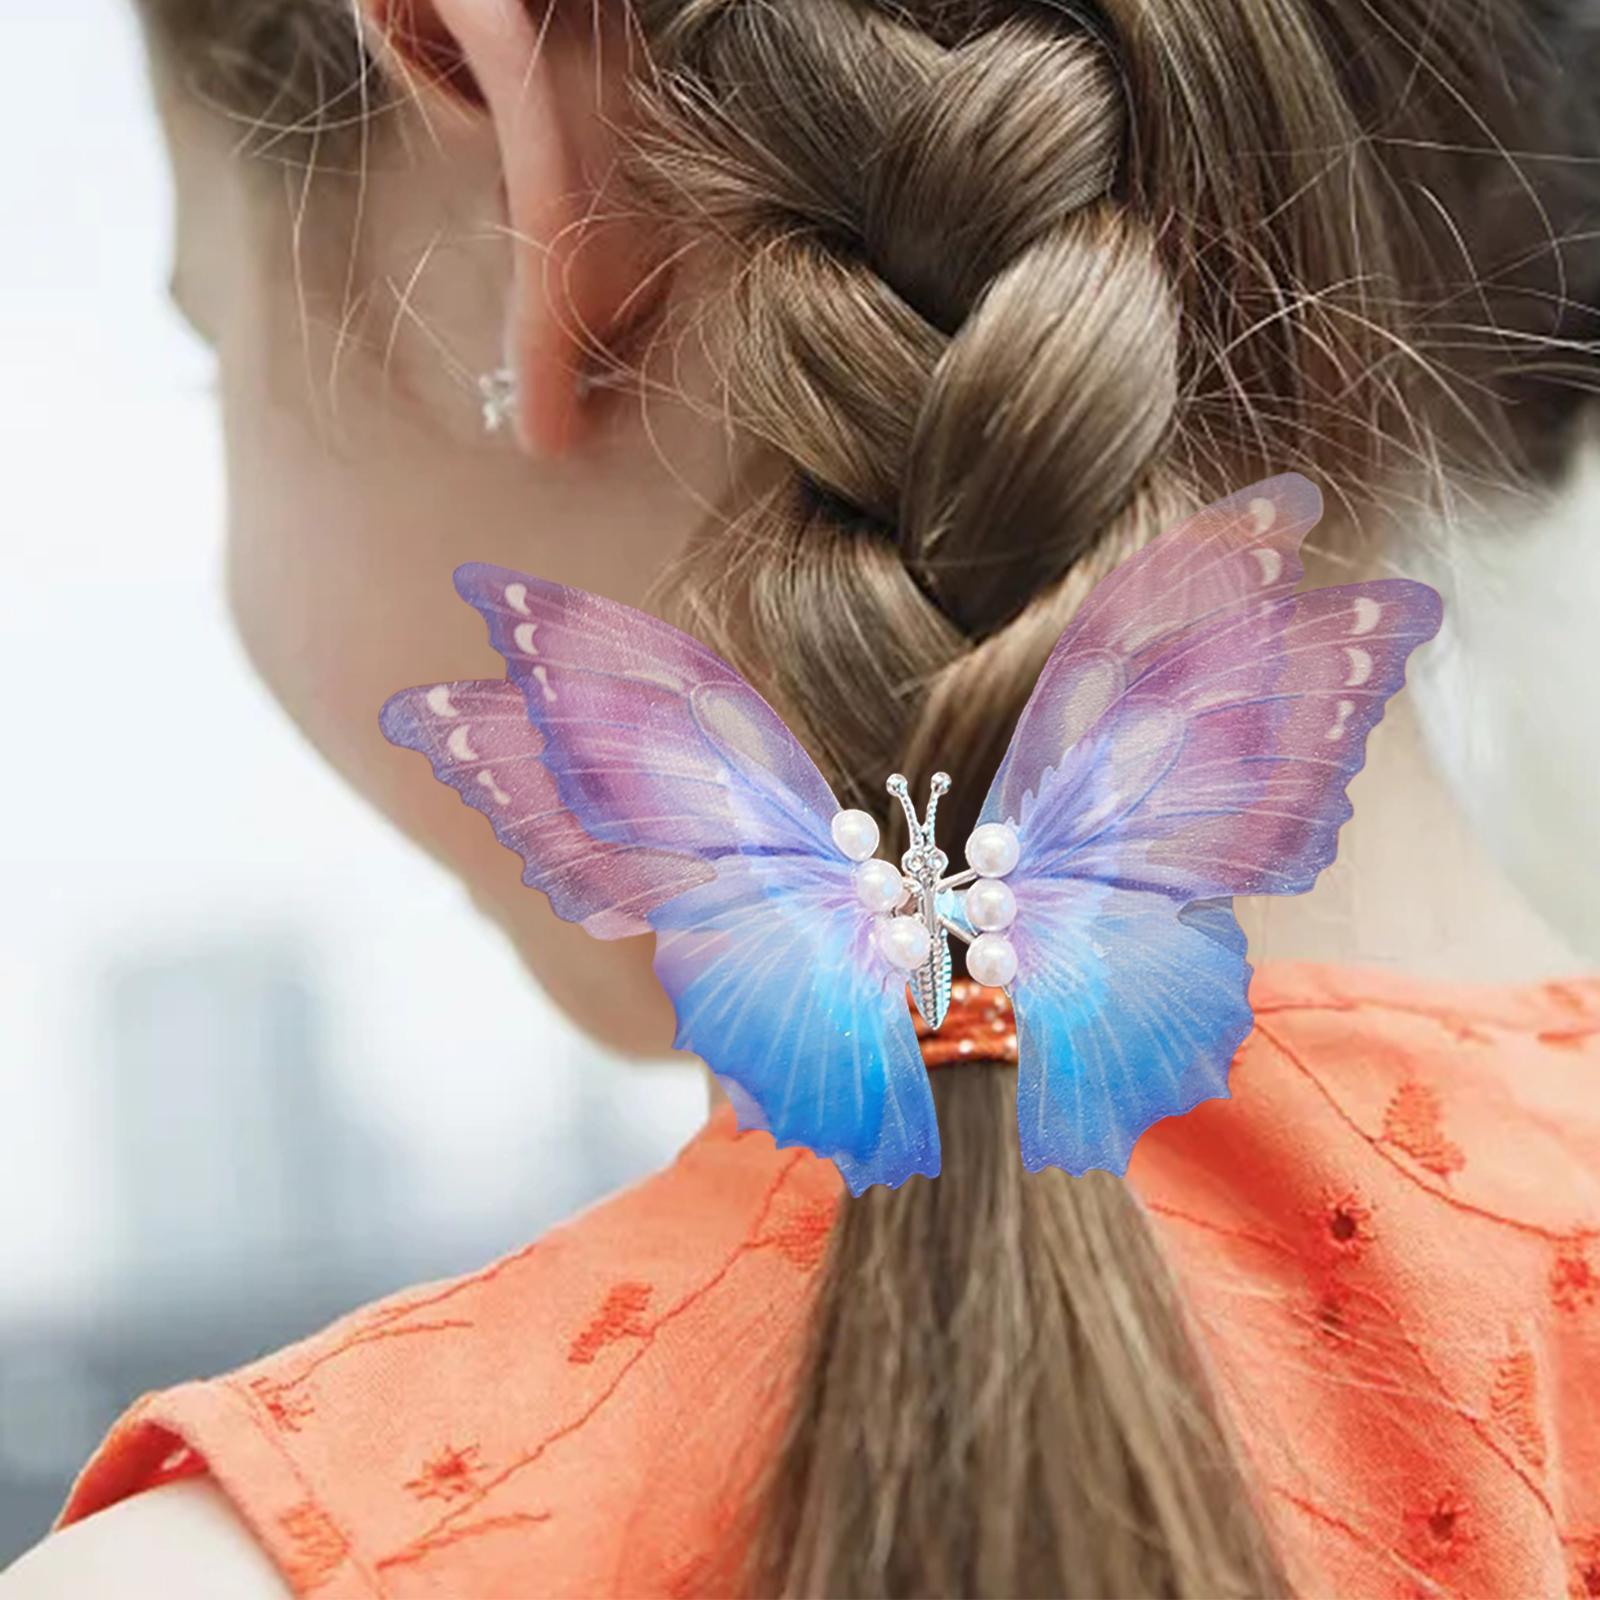 Butterfly Hair Clip Hair Clips for Girls ,Gifts, Women Girls, Elegant and Sweet, Cute Hair Accessories Clip ,Cartoon  Hair Accessories